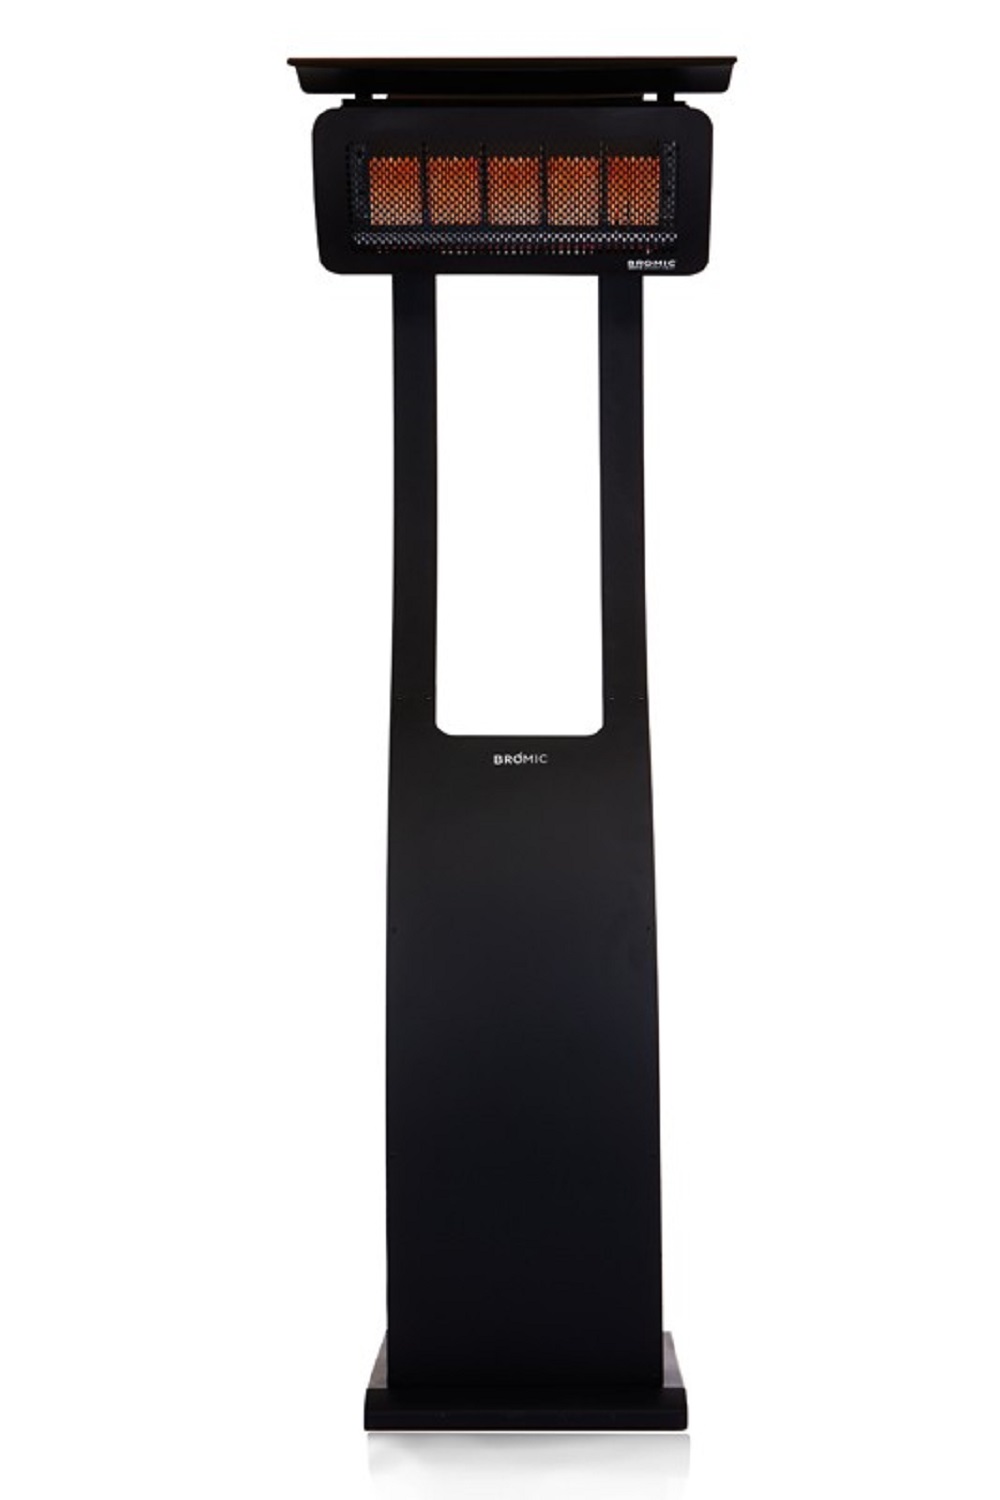 Tungsten Heater Portable 500 LPG-Neutral black finish and award winning design makes it a piece of modern art. Modular construct